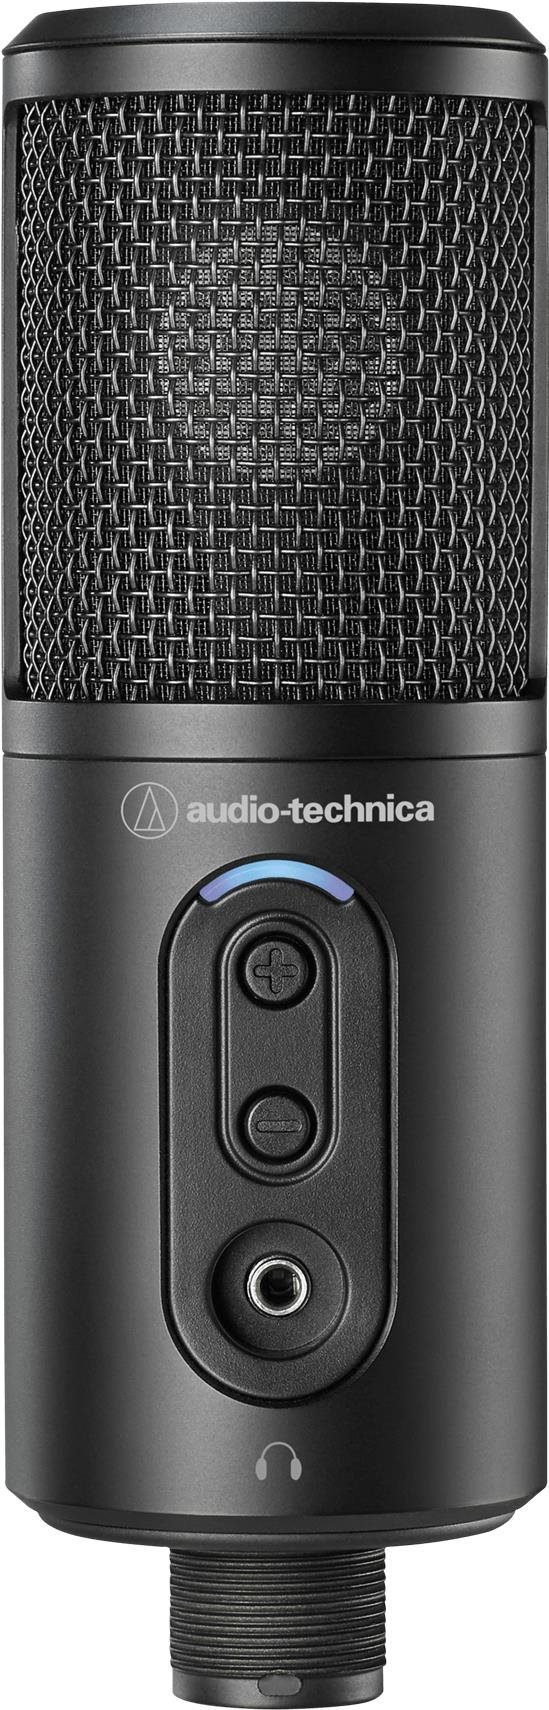 Mikrofon Audio-Technica ATR-2500X-USB